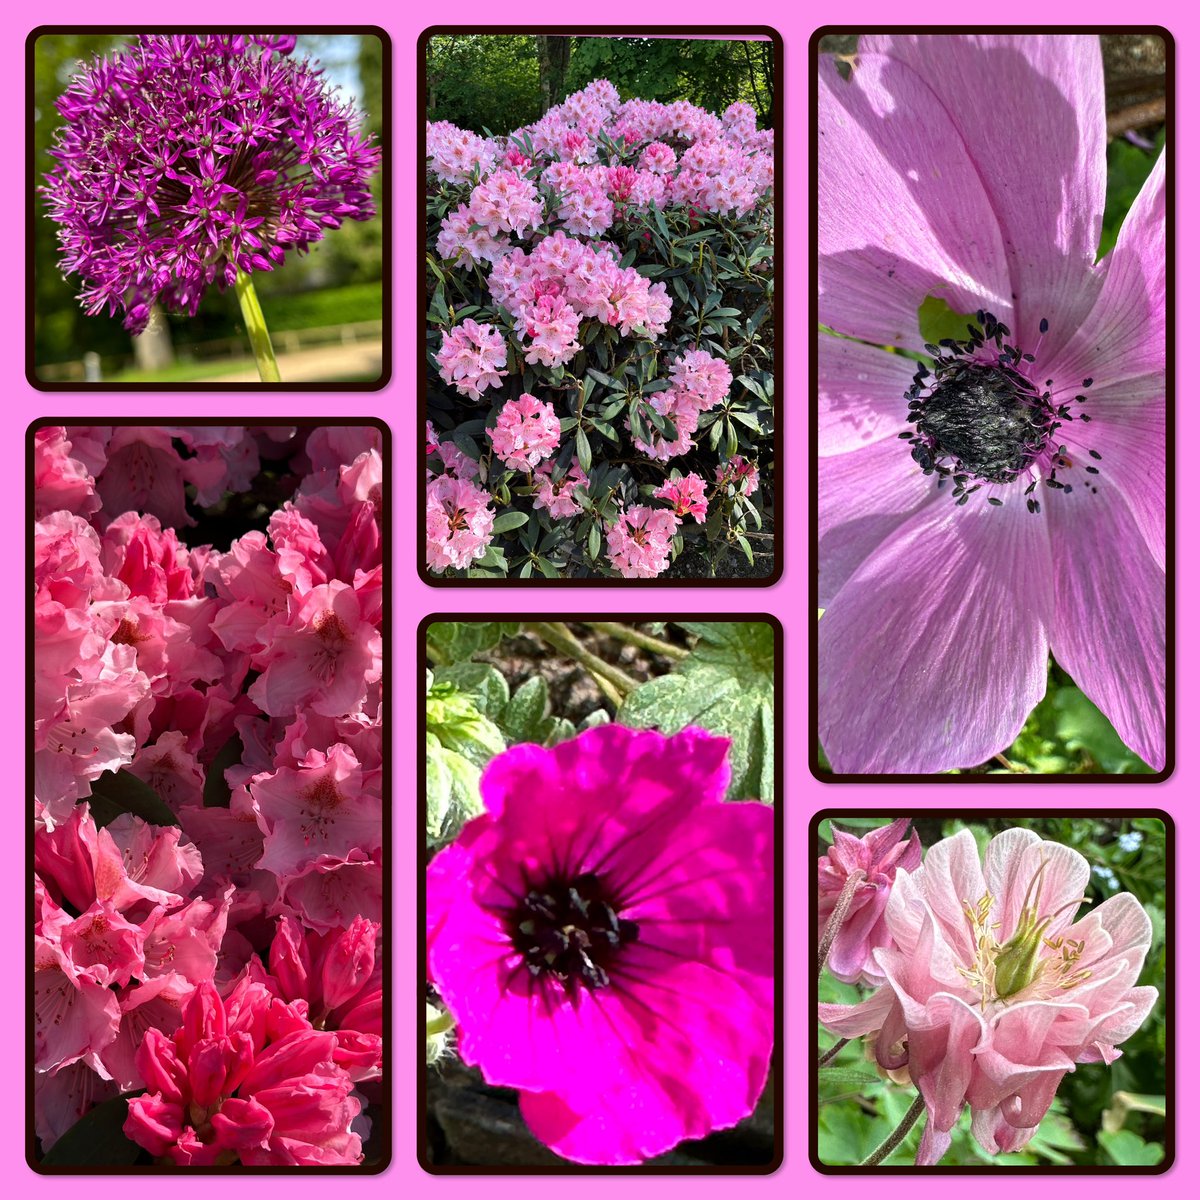 Lots of pink and purple in the garden today.
#SixOnSaturday #InThePink #GardeningTwitter #Flowers